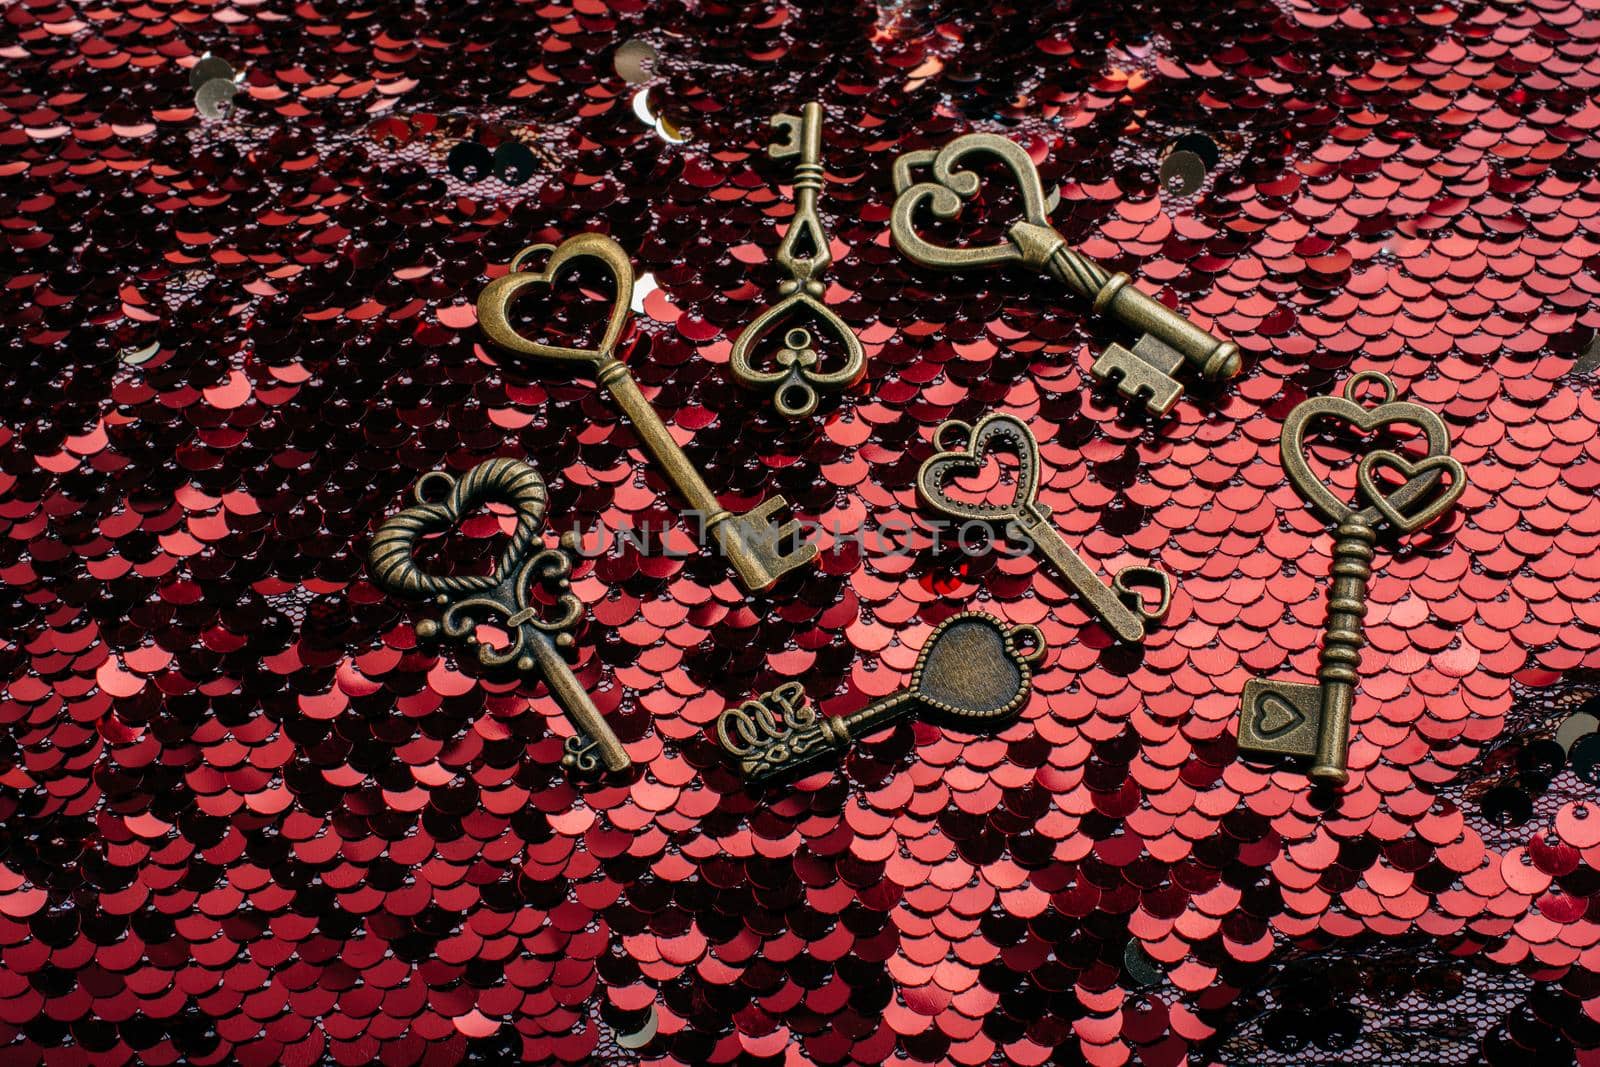 Retro style metal keys as love concept by berkay